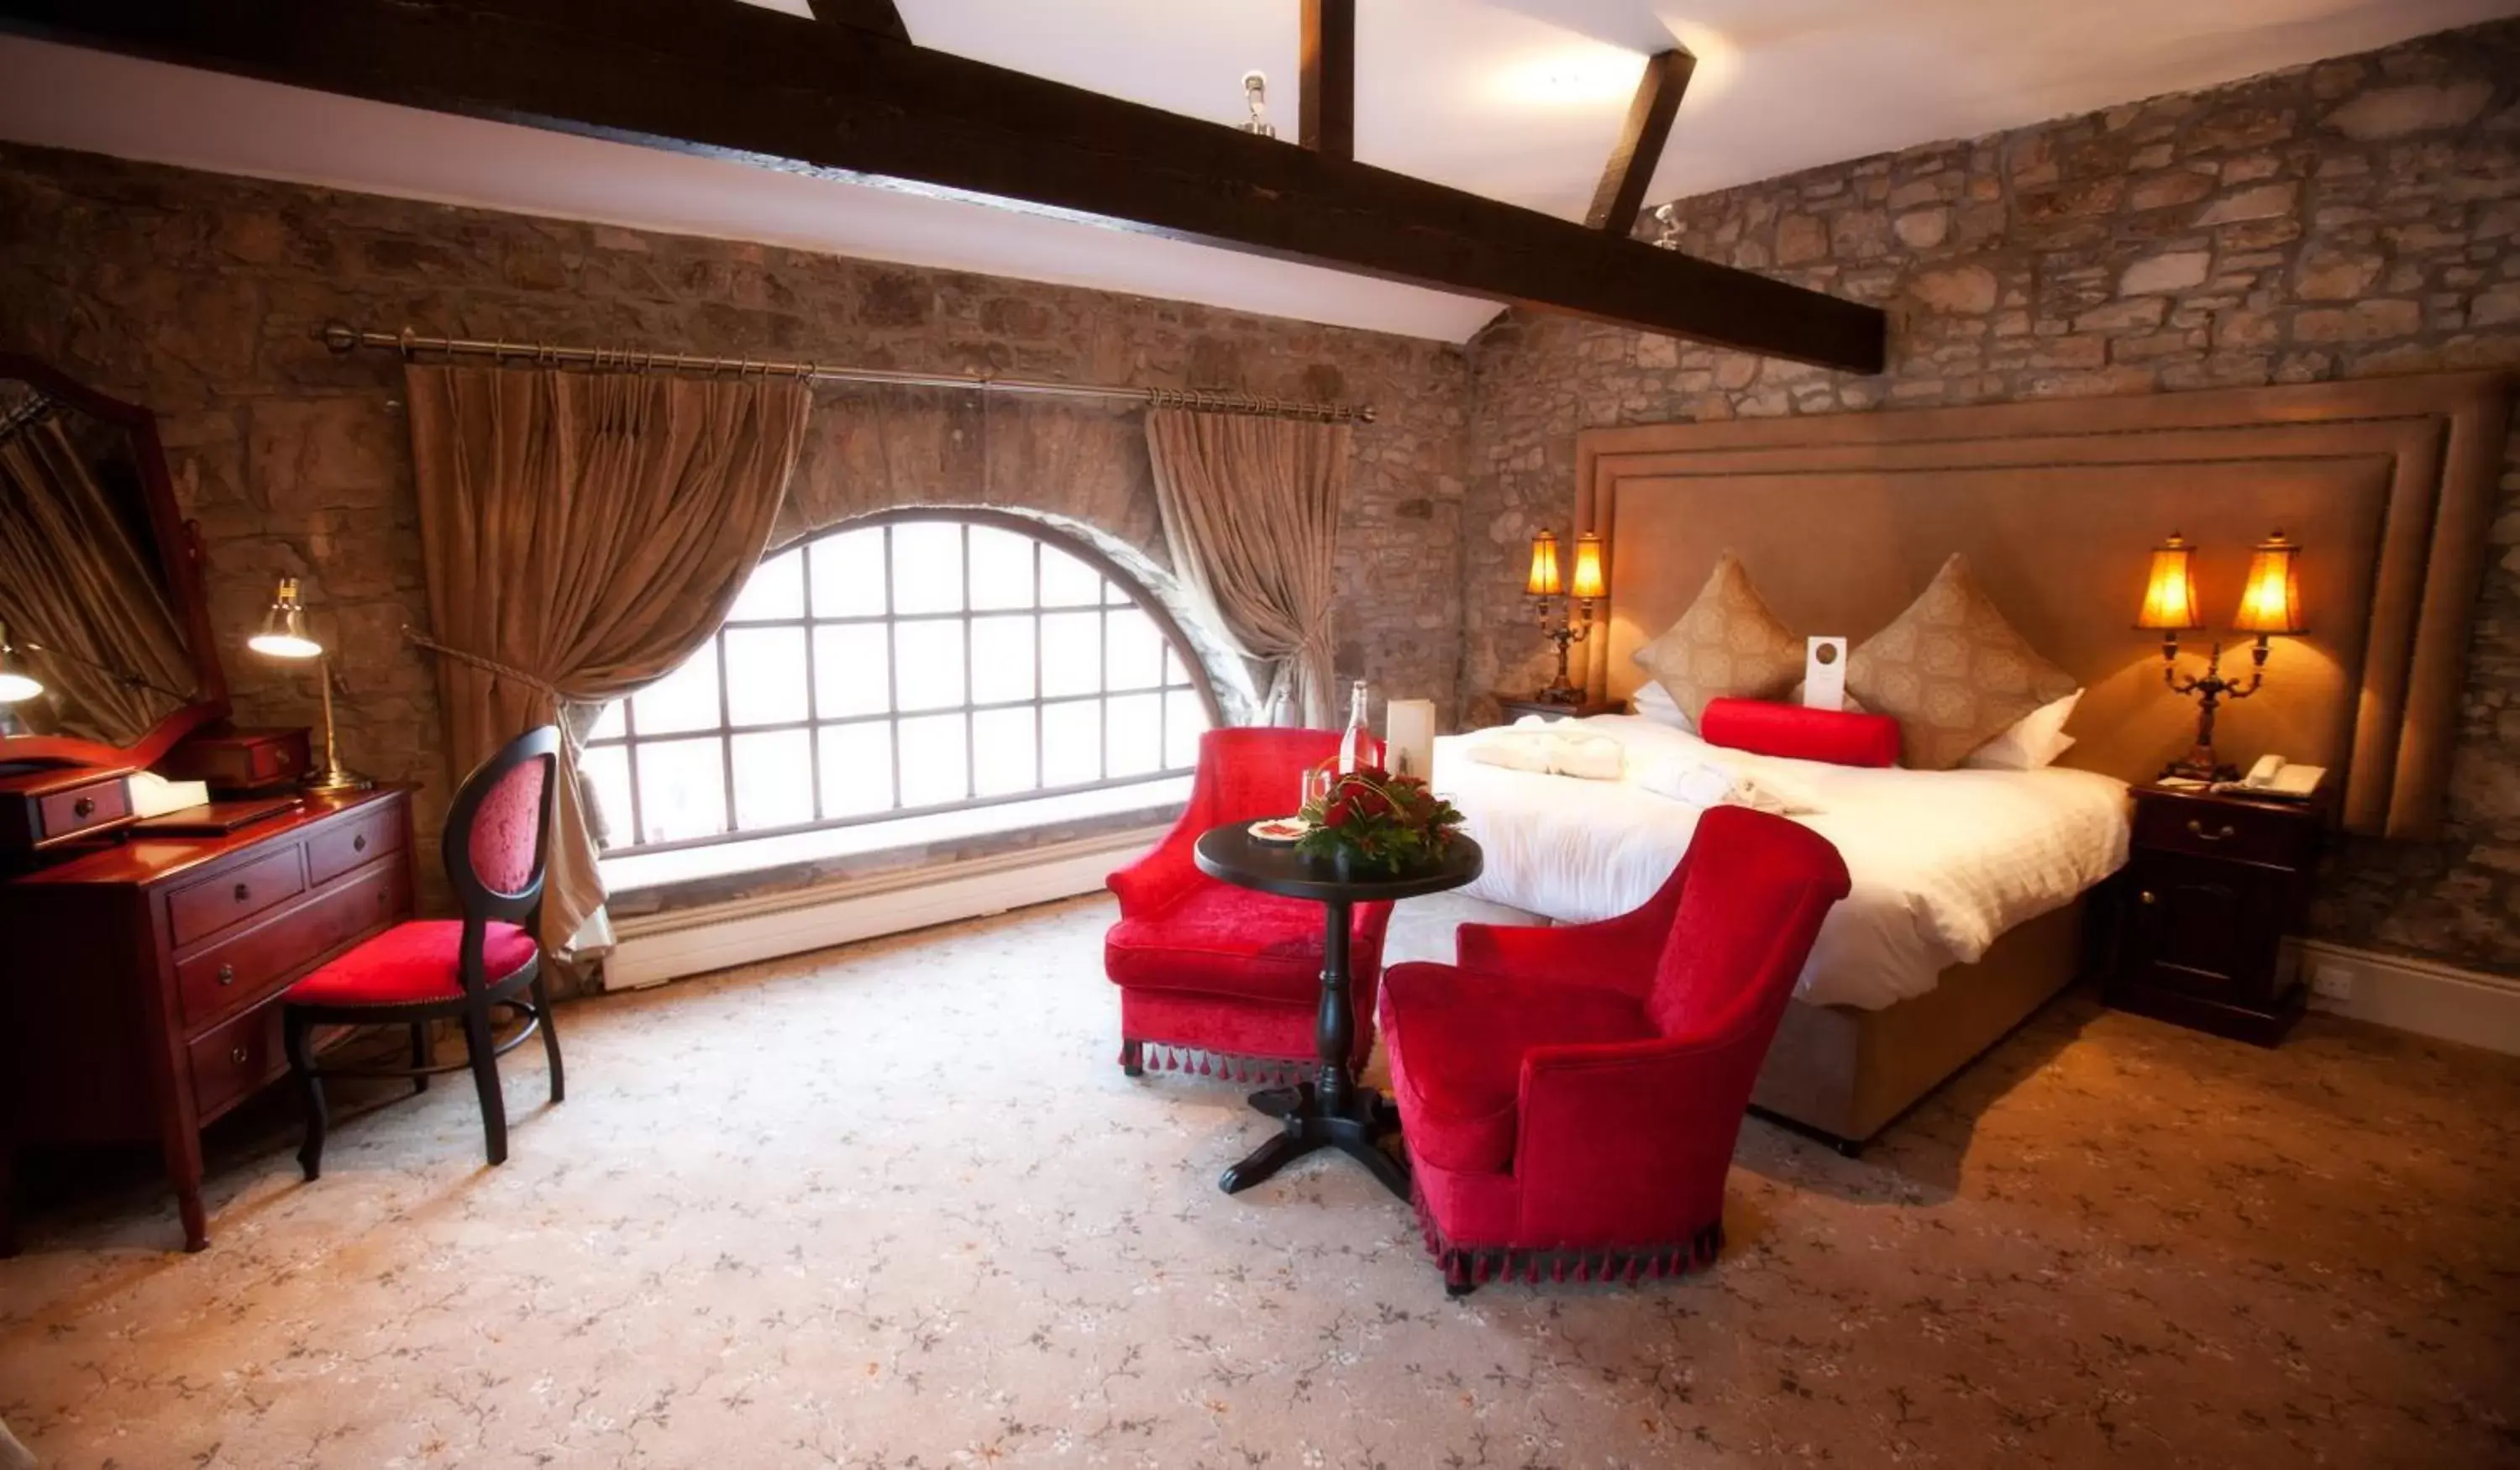 Bed in Cabra Castle Hotel